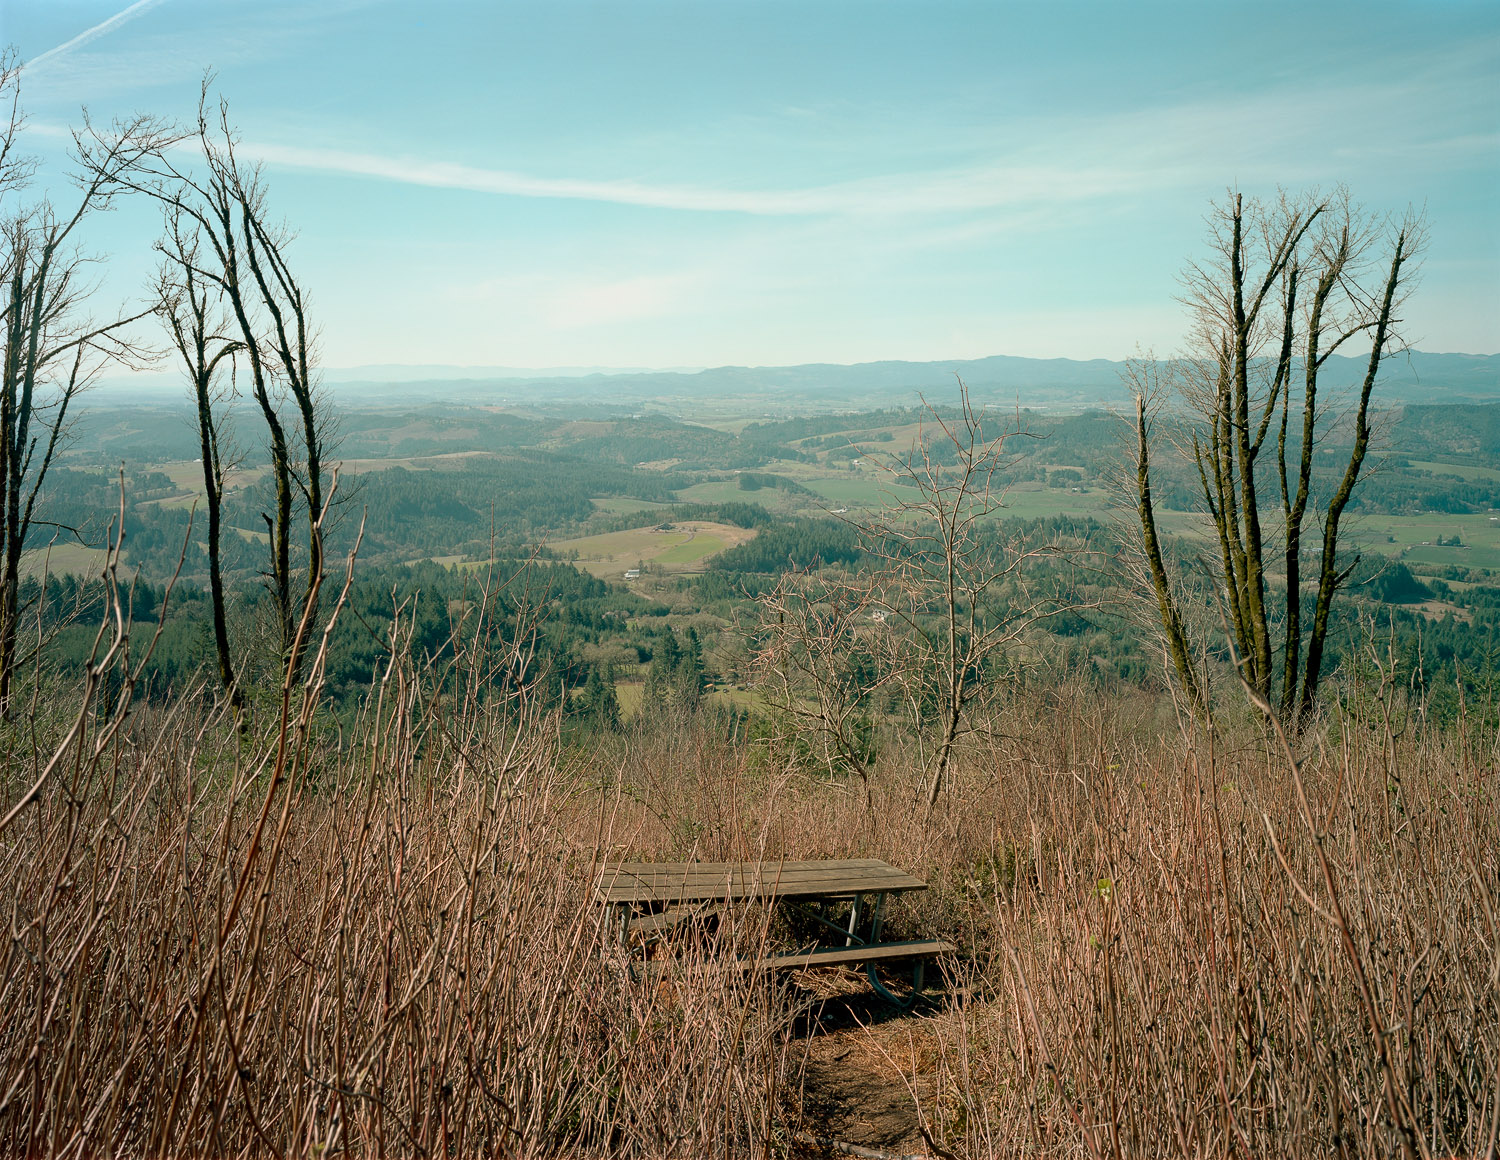  Bald Peak State Scenic Viewpoint, Hillsboro, OR, 2015 